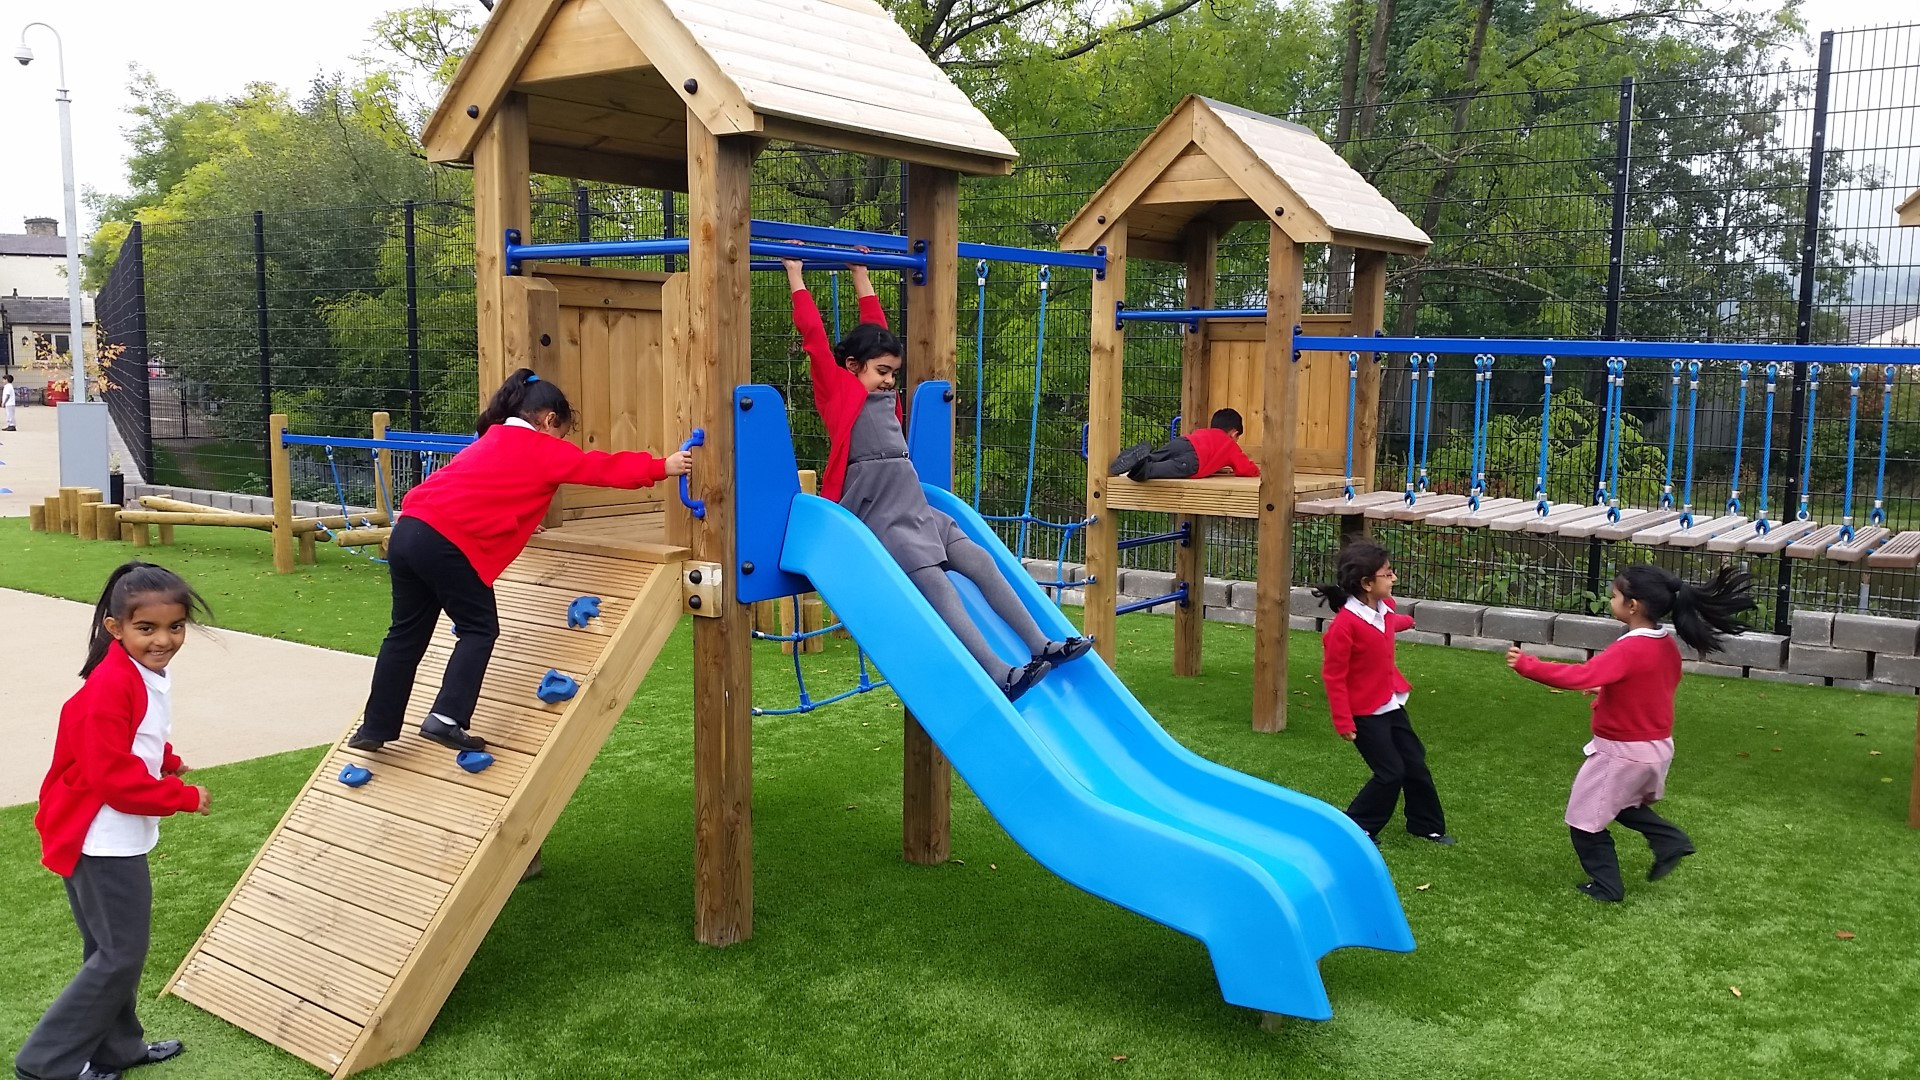 Backyard Children'S Play Equipment
 How Outdoor Play Can Improve Children s Sleep